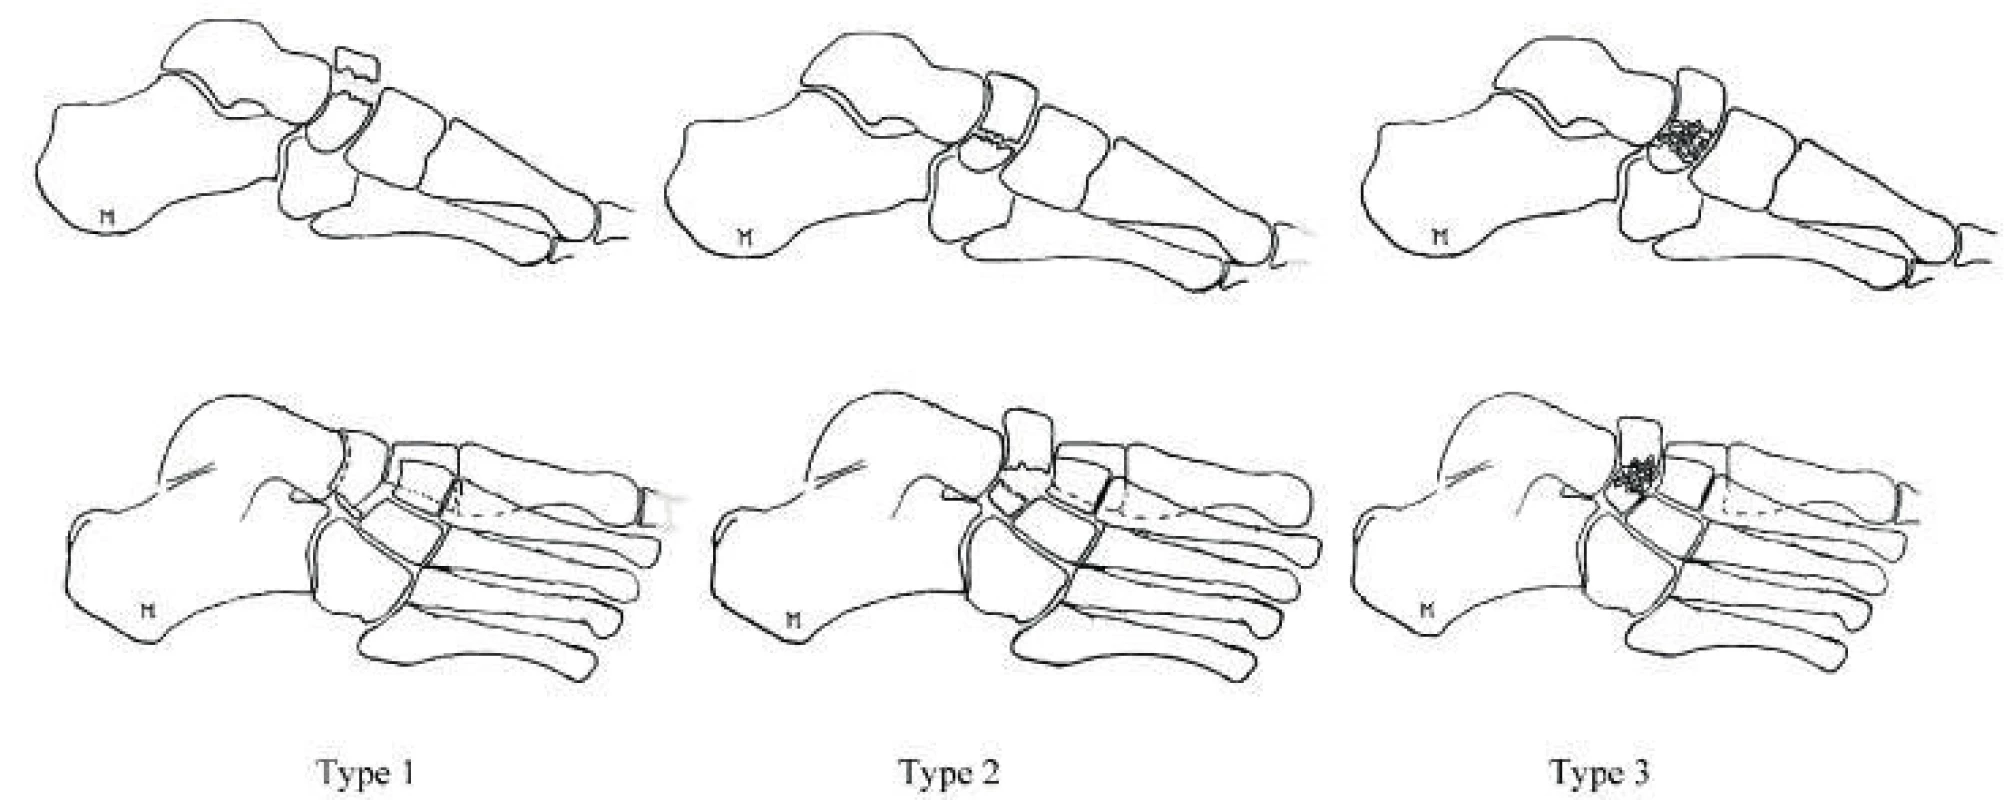 Zlomeniny člunkové kosti dle DeLeeho (Zdroj. Moore Derek.
Tarsal navicular Fractures: https://www.orthobullets.com/foot-and-ankle/
7033/tarsal-navicular-fractures)